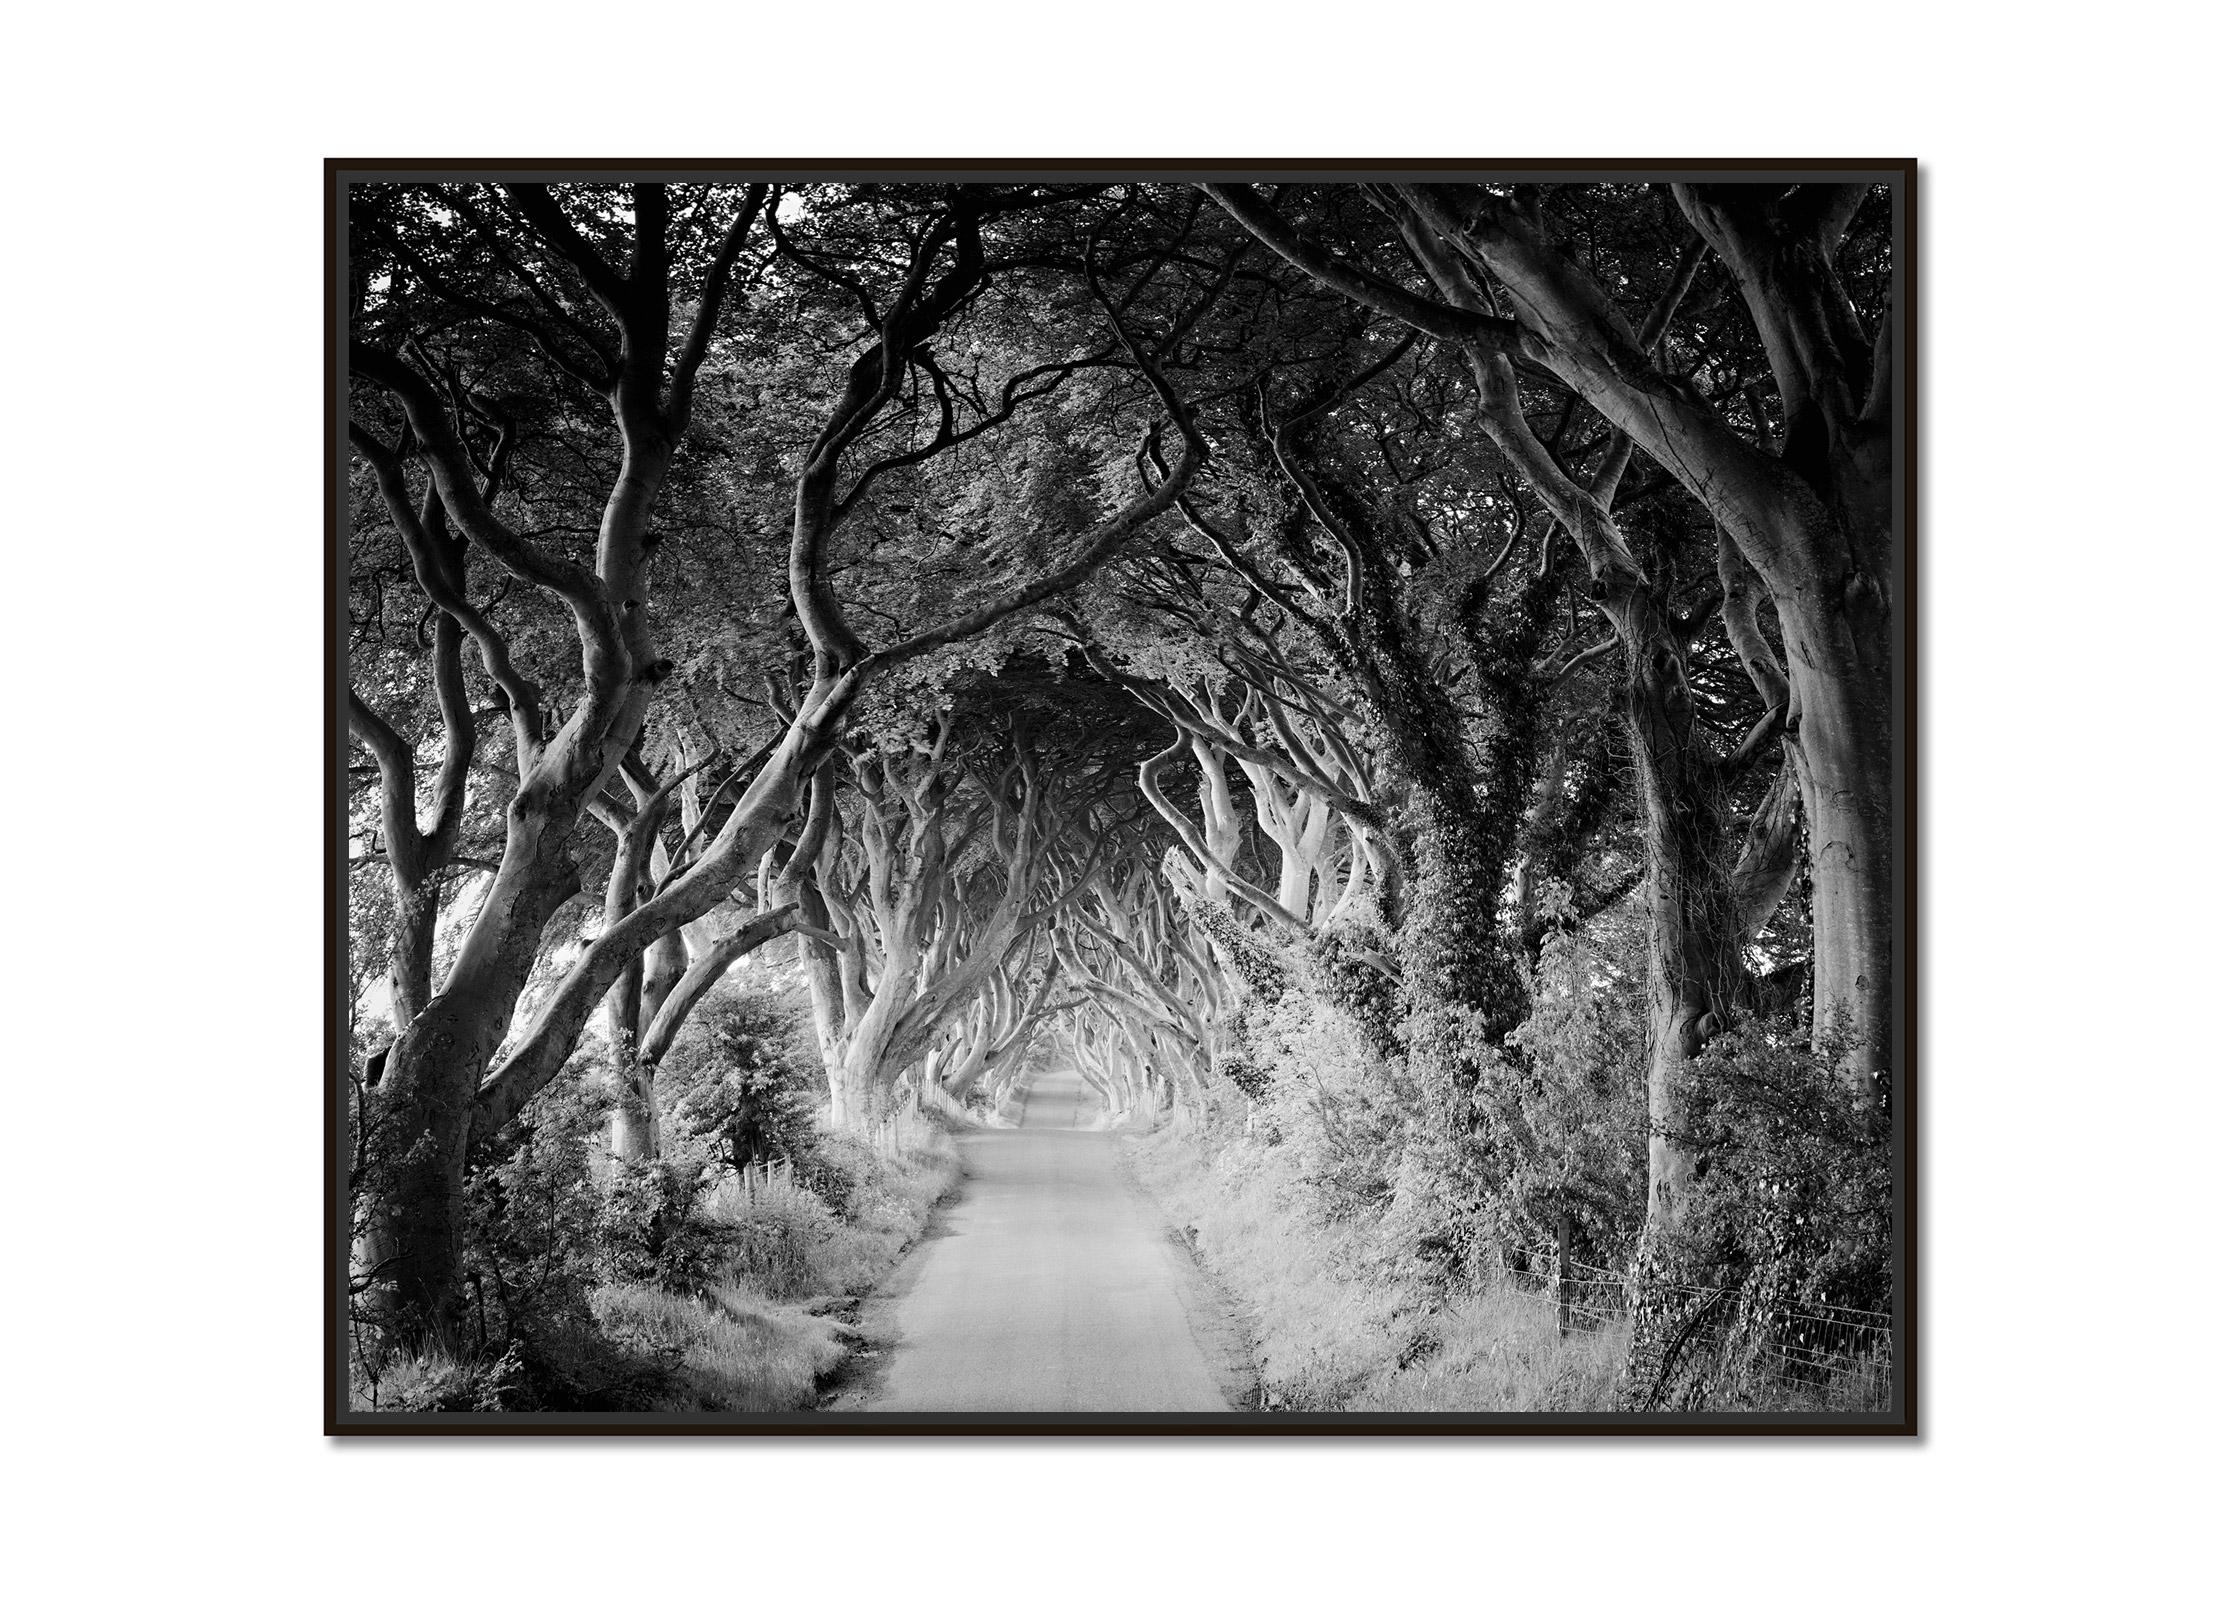 Dark Hedges, beeche, trees, Ireland, black and white art landscape photography - Photograph de Gerald Berghammer